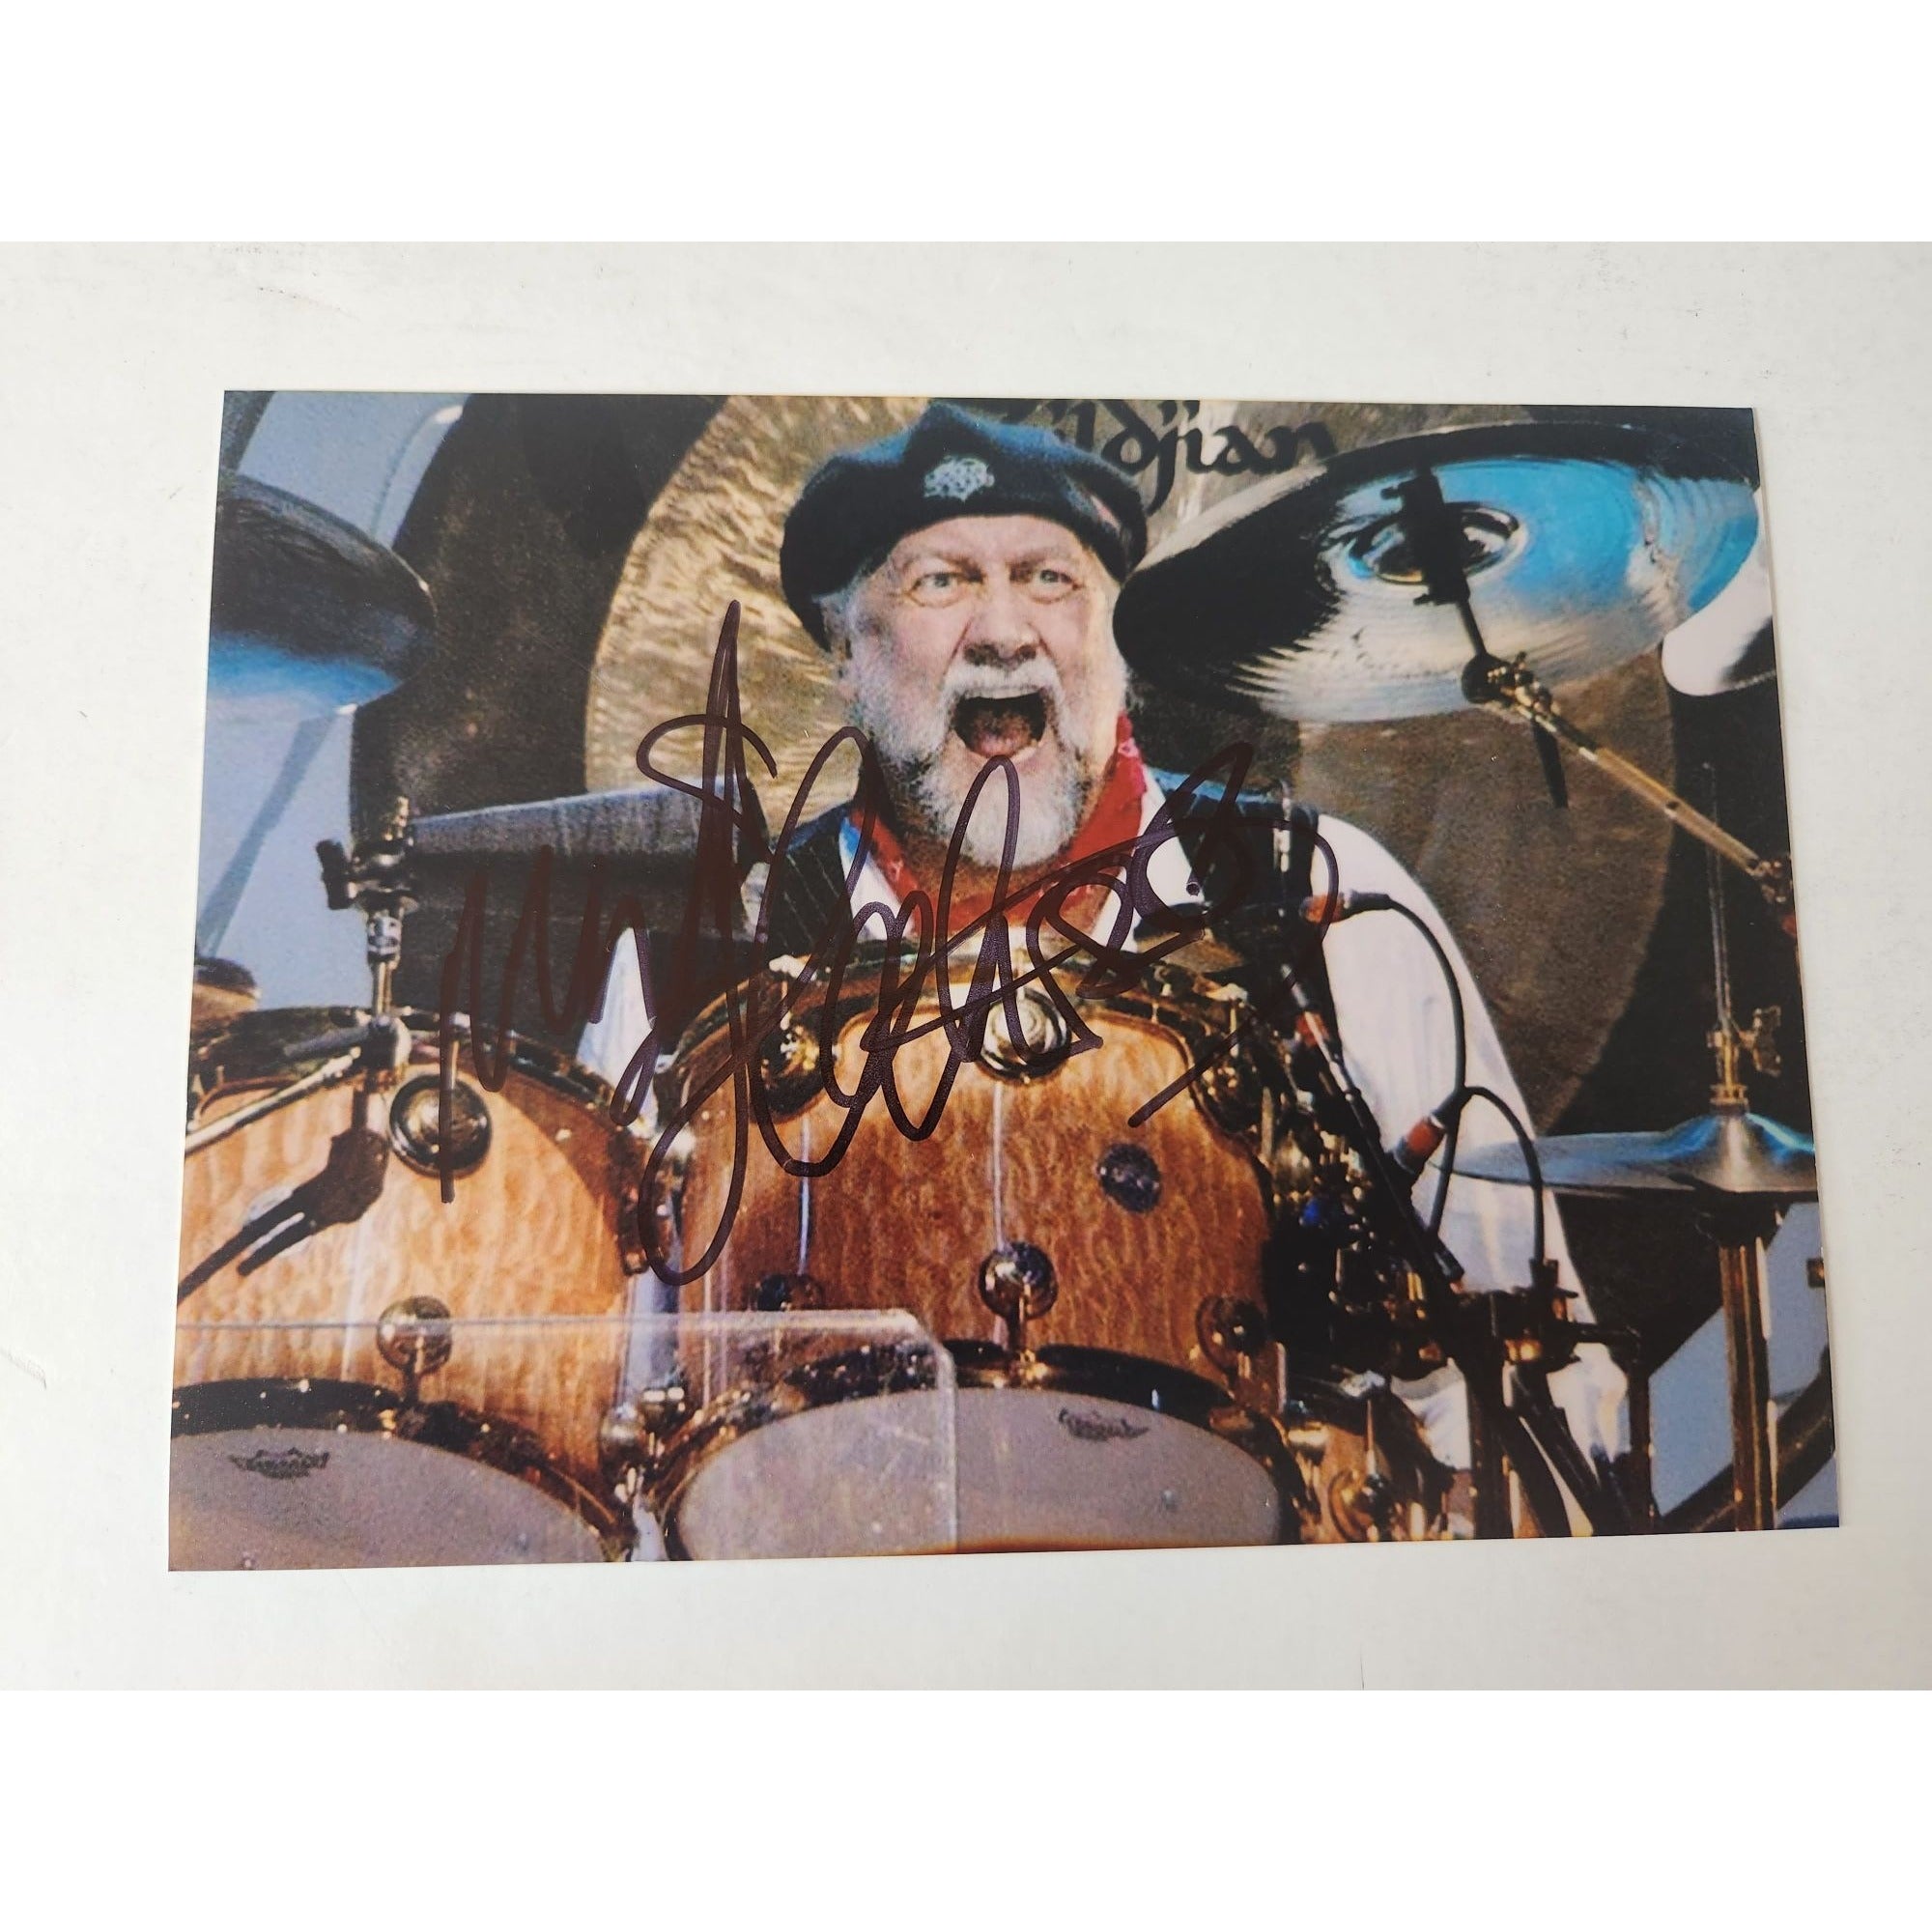 Mick Fleetwood legendary Fleetwood Mac drummer 5x7 photo signed with proof